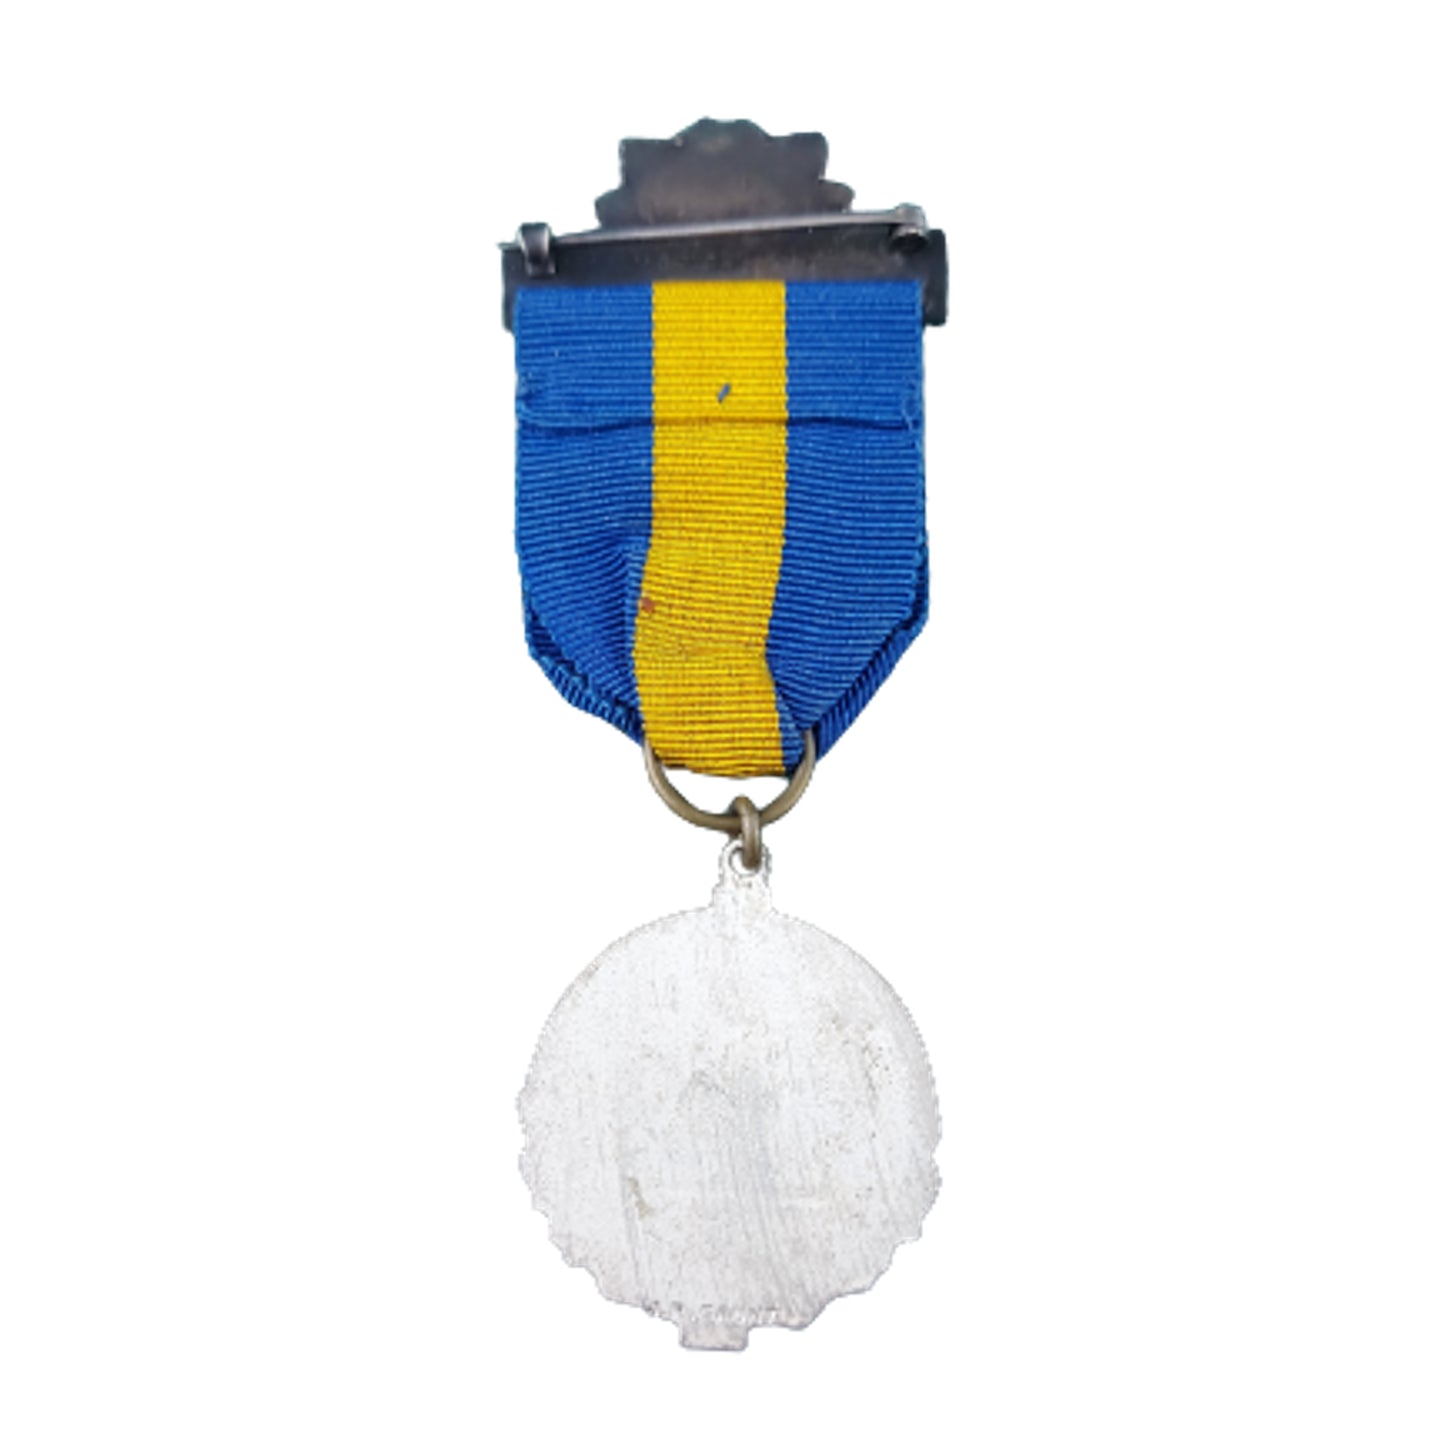 Canadian Legion Vimy Pilgrimage Participant's Medal 1936